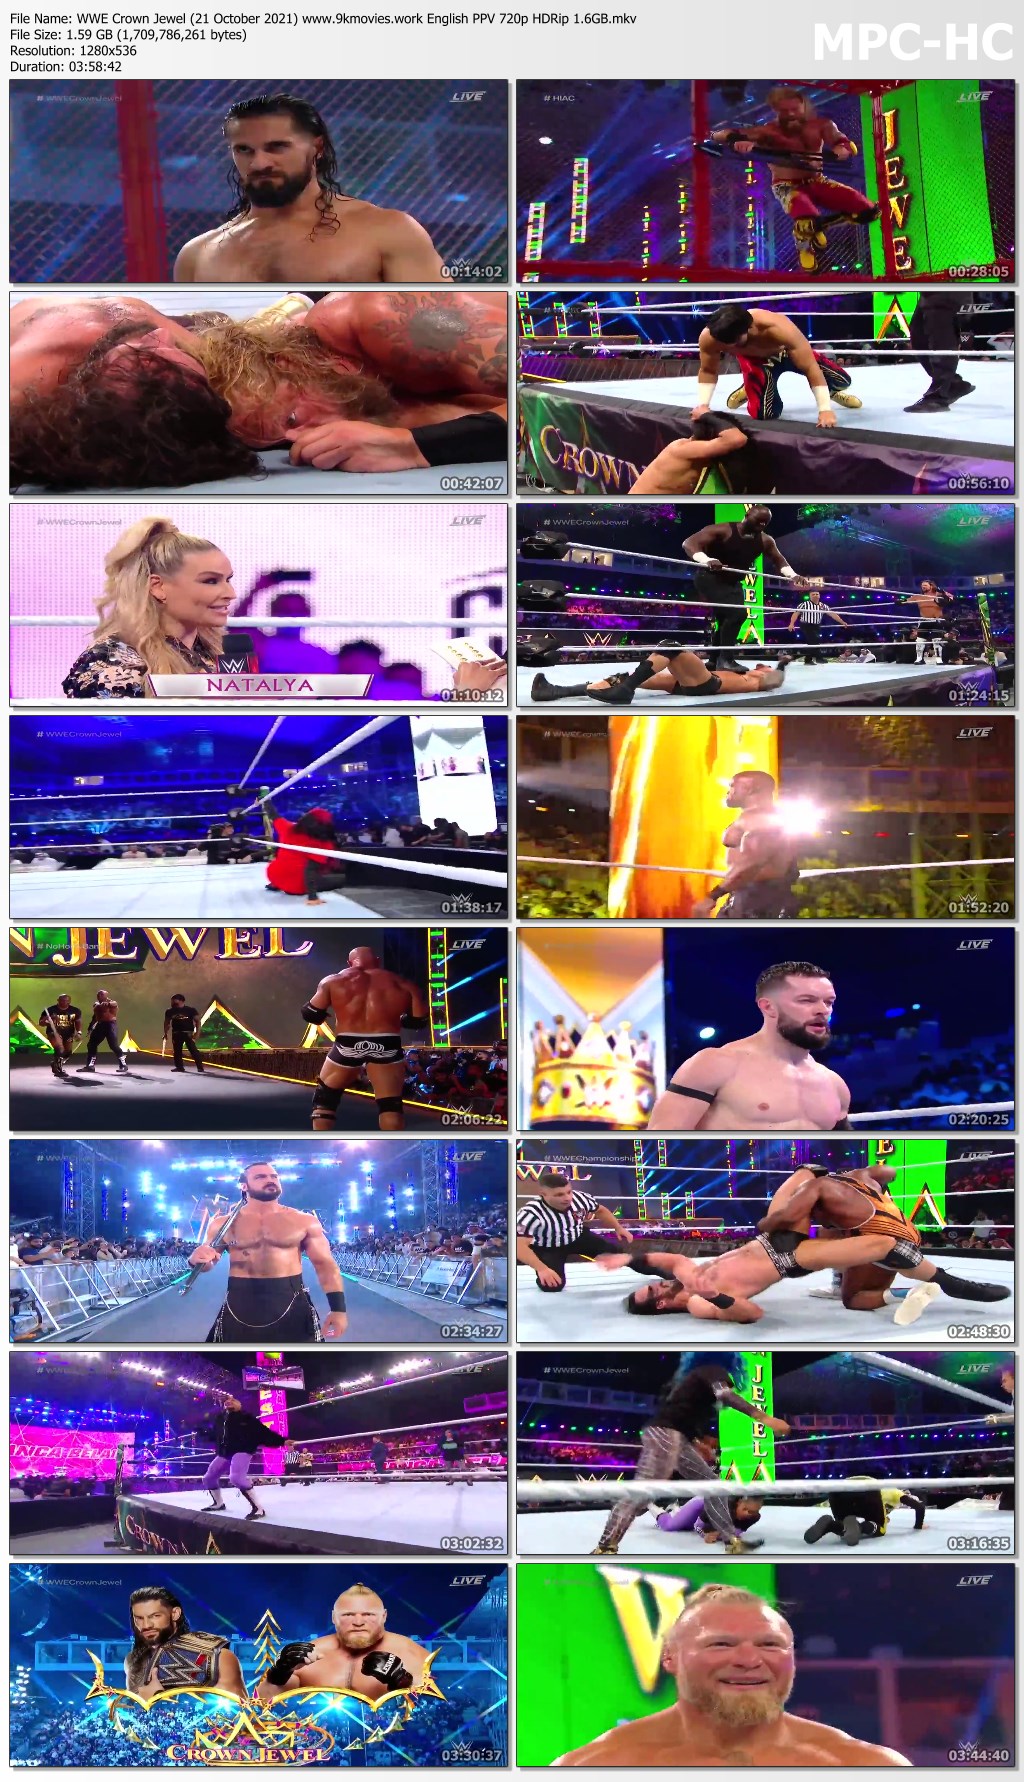 WWE Crown Jewel 21 October 2021 www.9kmovies.work English PPV 720p HDRip 1.6GB.mkv thumbs16fc67fd8c6cd04a